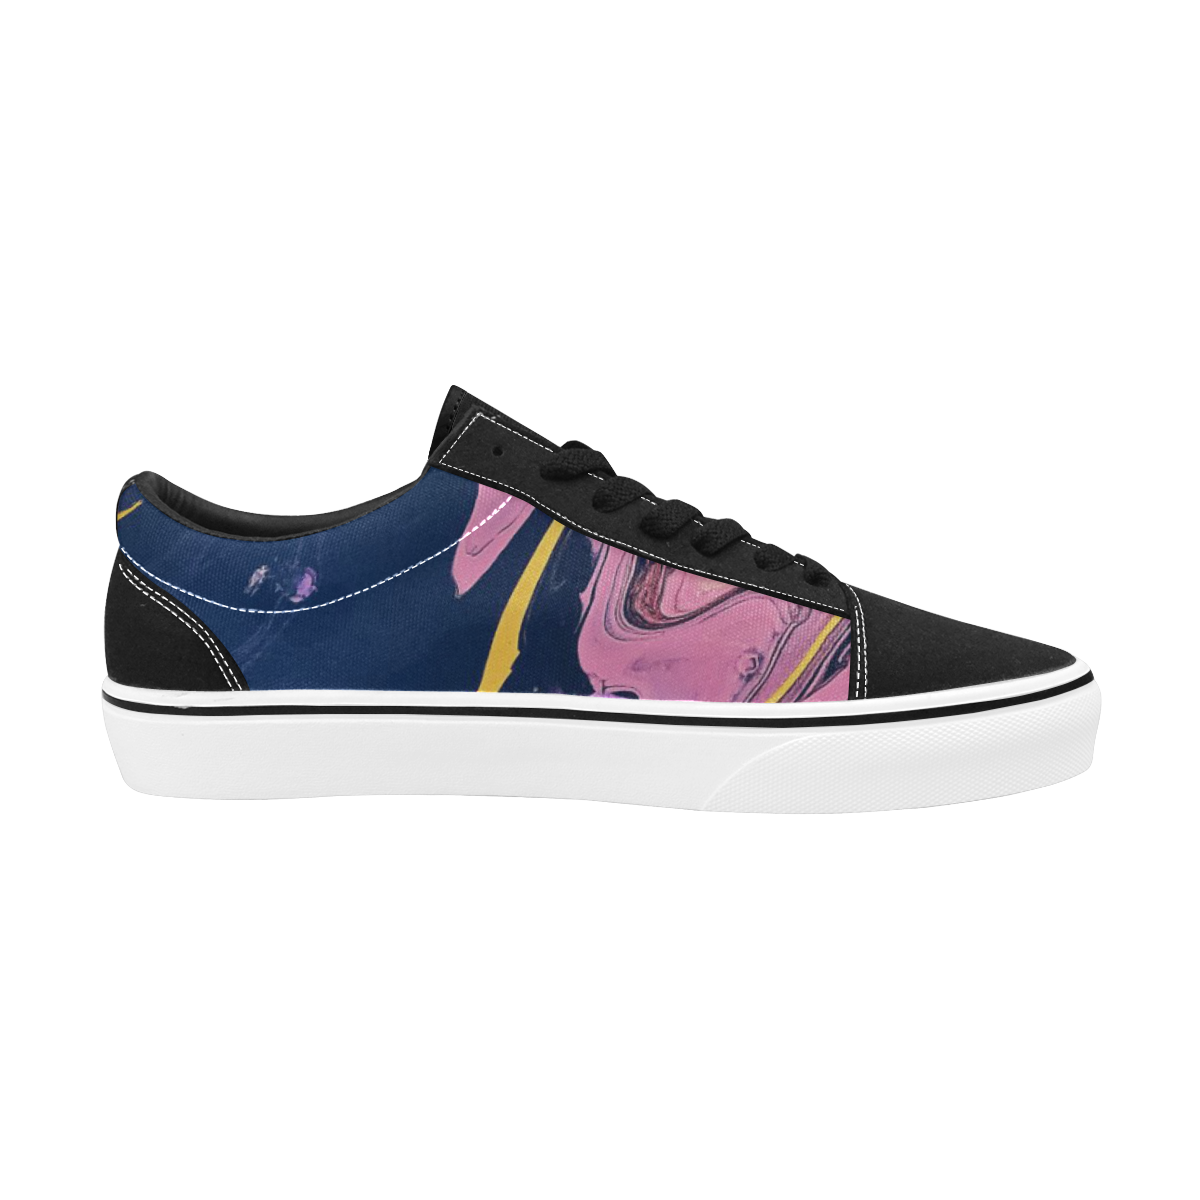 YBP Women's Low Top Skateboarding Shoes (Model E001-2)